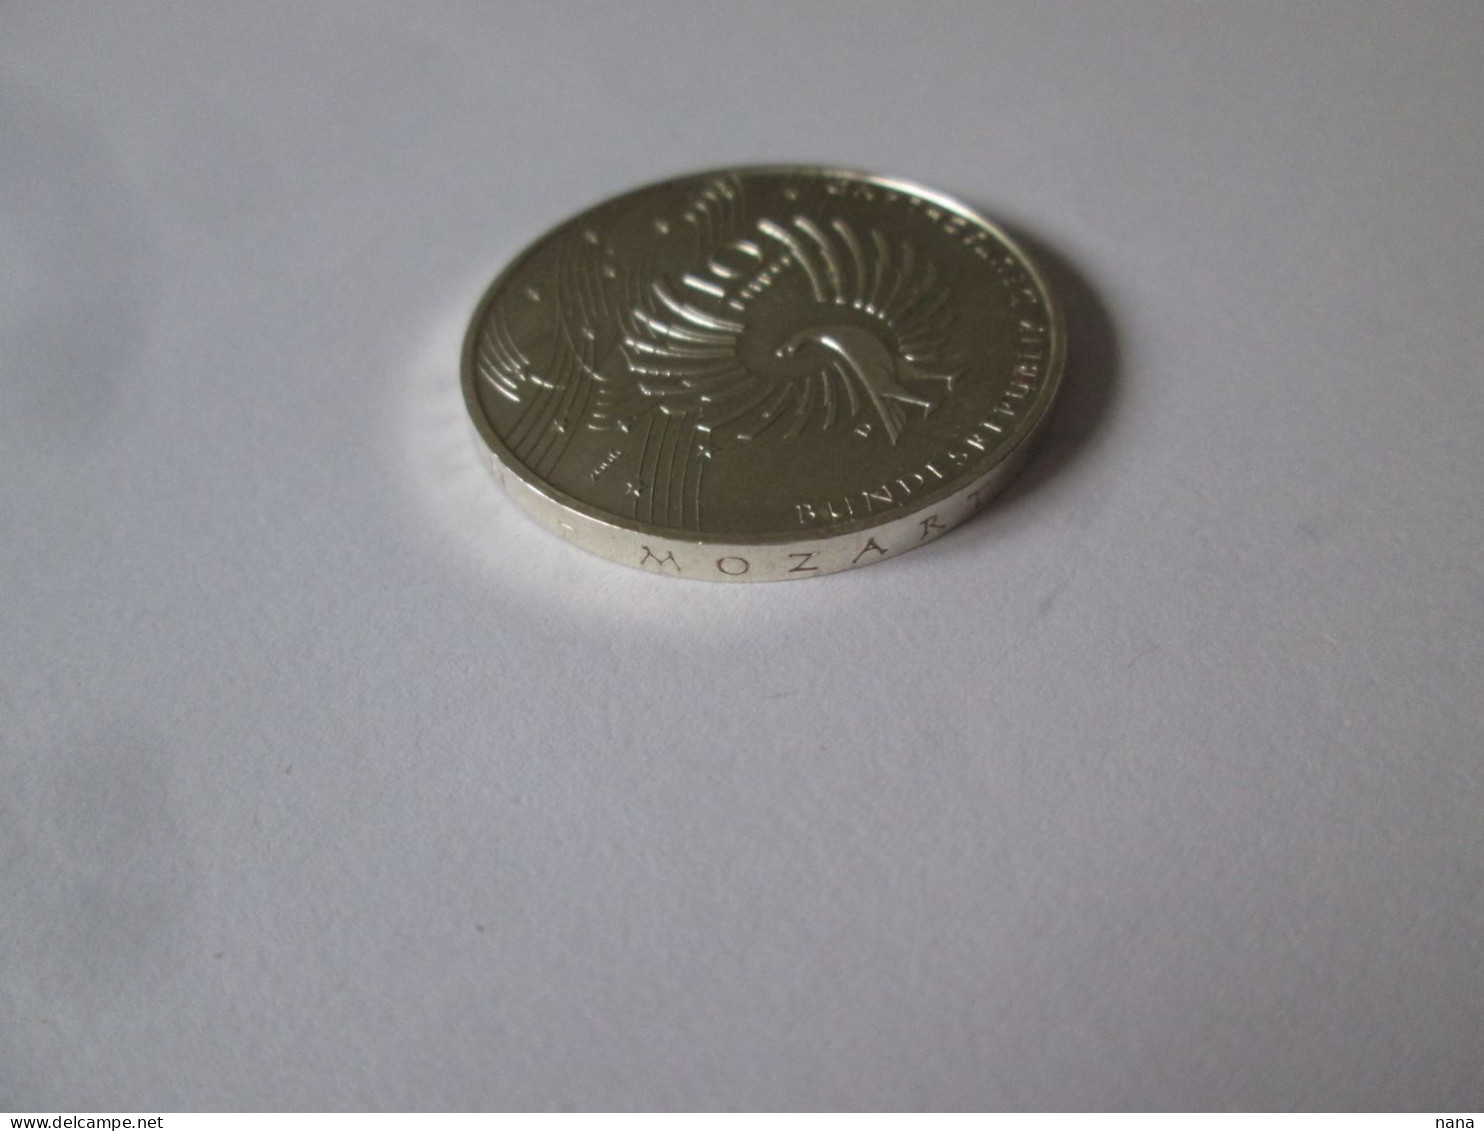 Germany 10 Euro 2006 D AUNC Silver/Argent.925 Commemorative Coin:Mozart,diameter=32 Mm,weight=18 Grams - Herdenkingsmunt